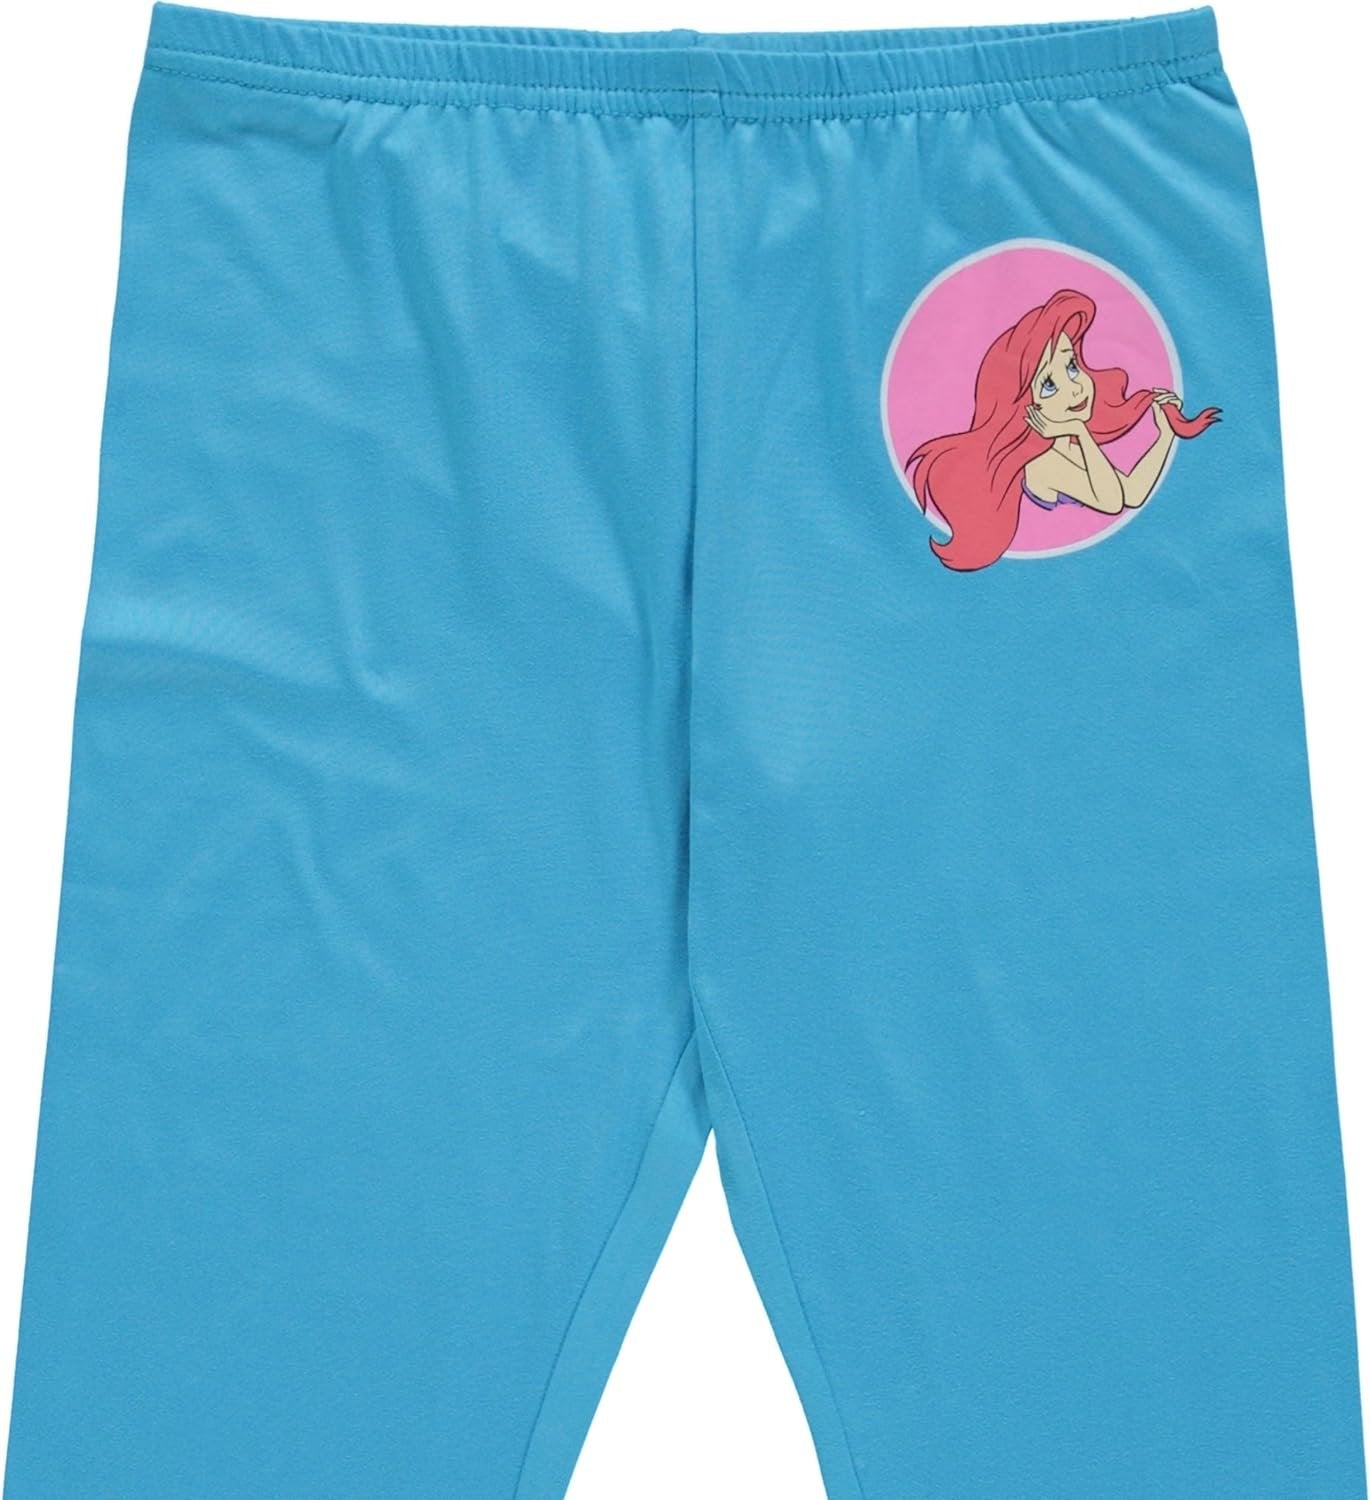 Disney The Little Mermaid Leggings Clothing Set, Ariel Short Sleeve T-Shirt and Leggings Set- Girls Sizes 4-16